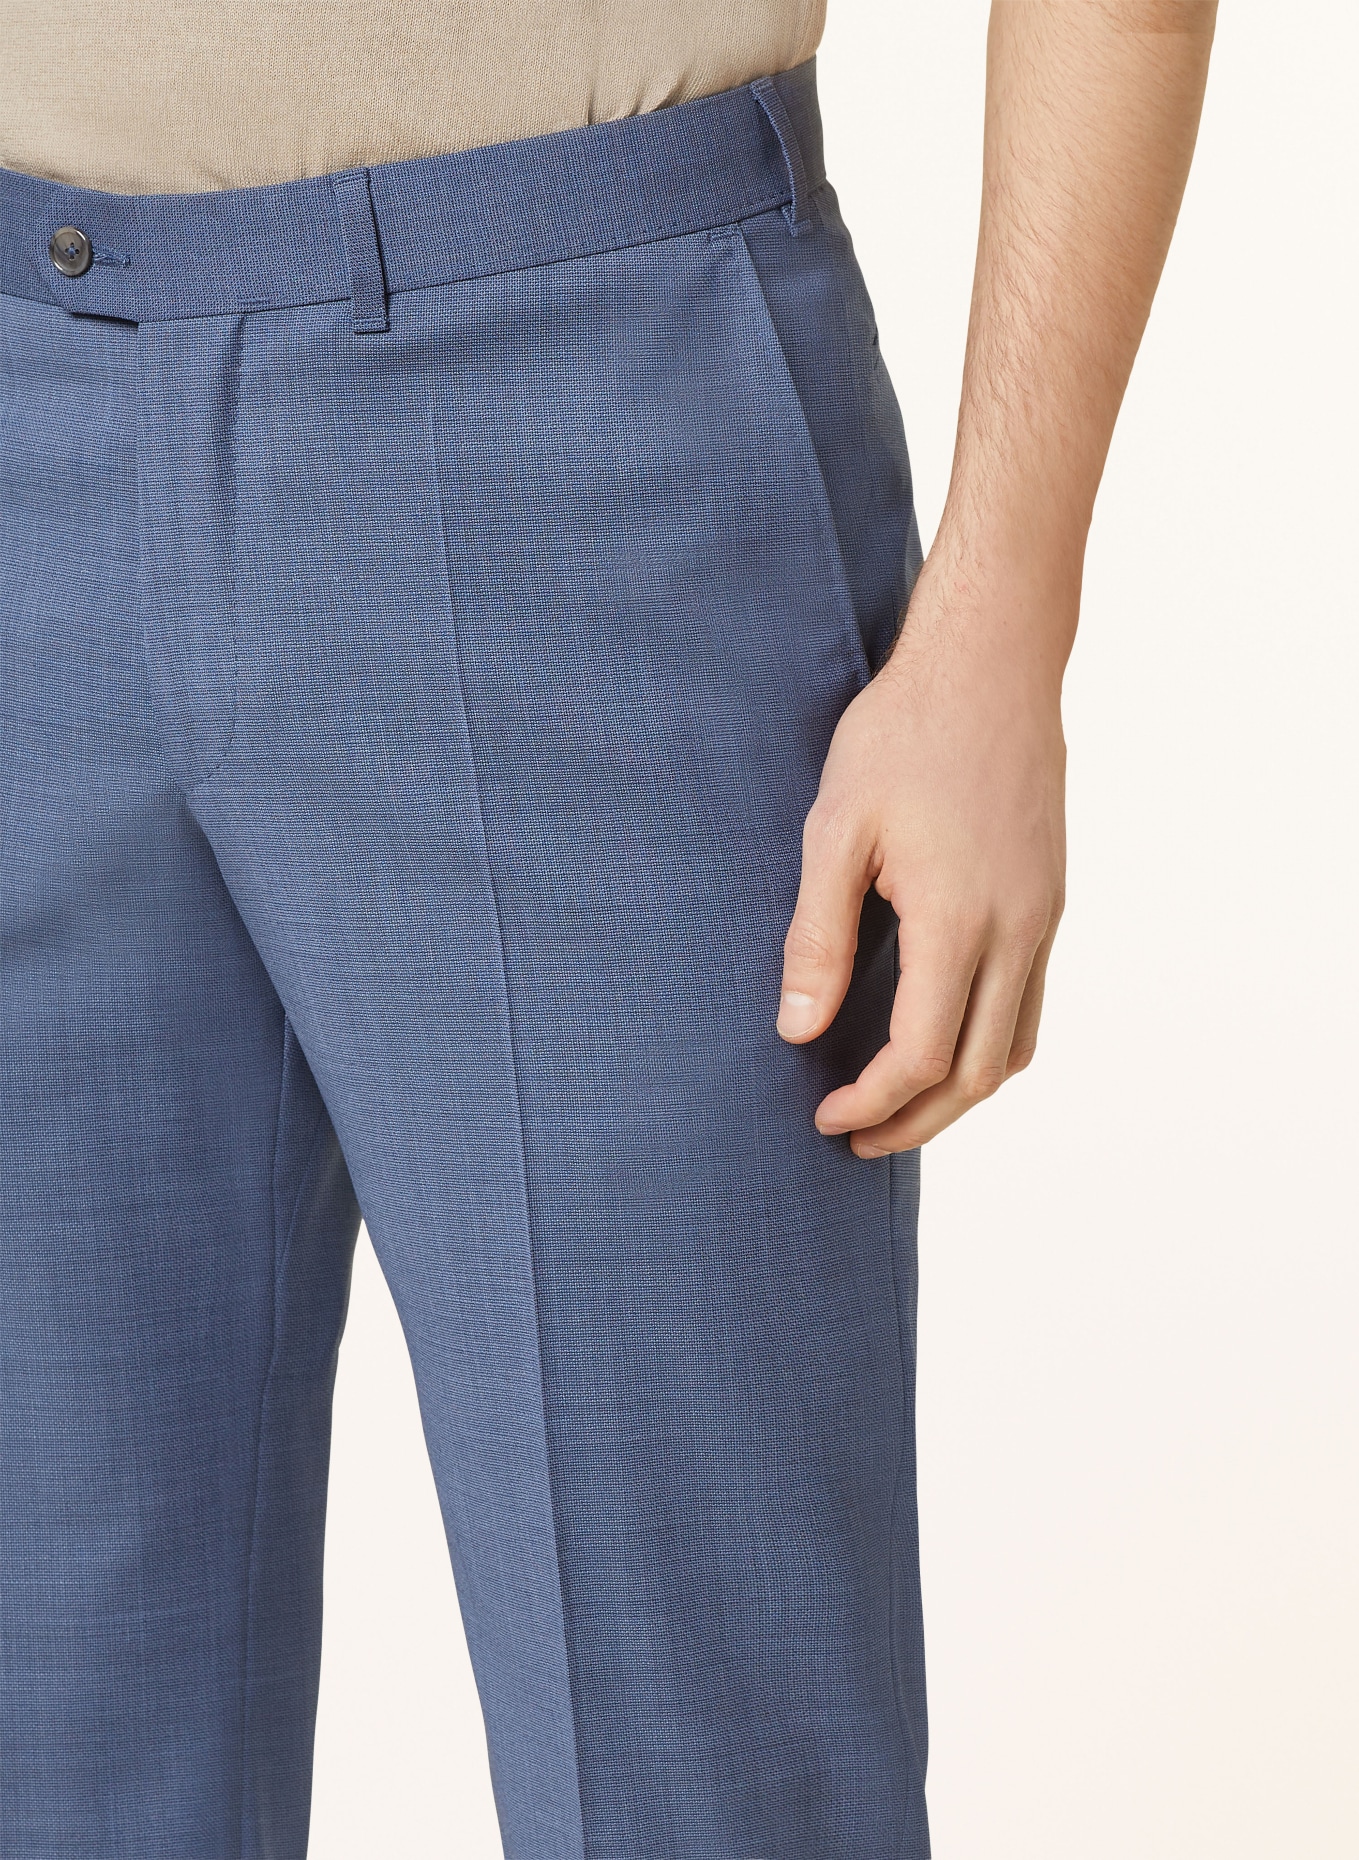 EDUARD DRESSLER Anzughose Slim Fit, Farbe: 036 hellblau (Bild 7)